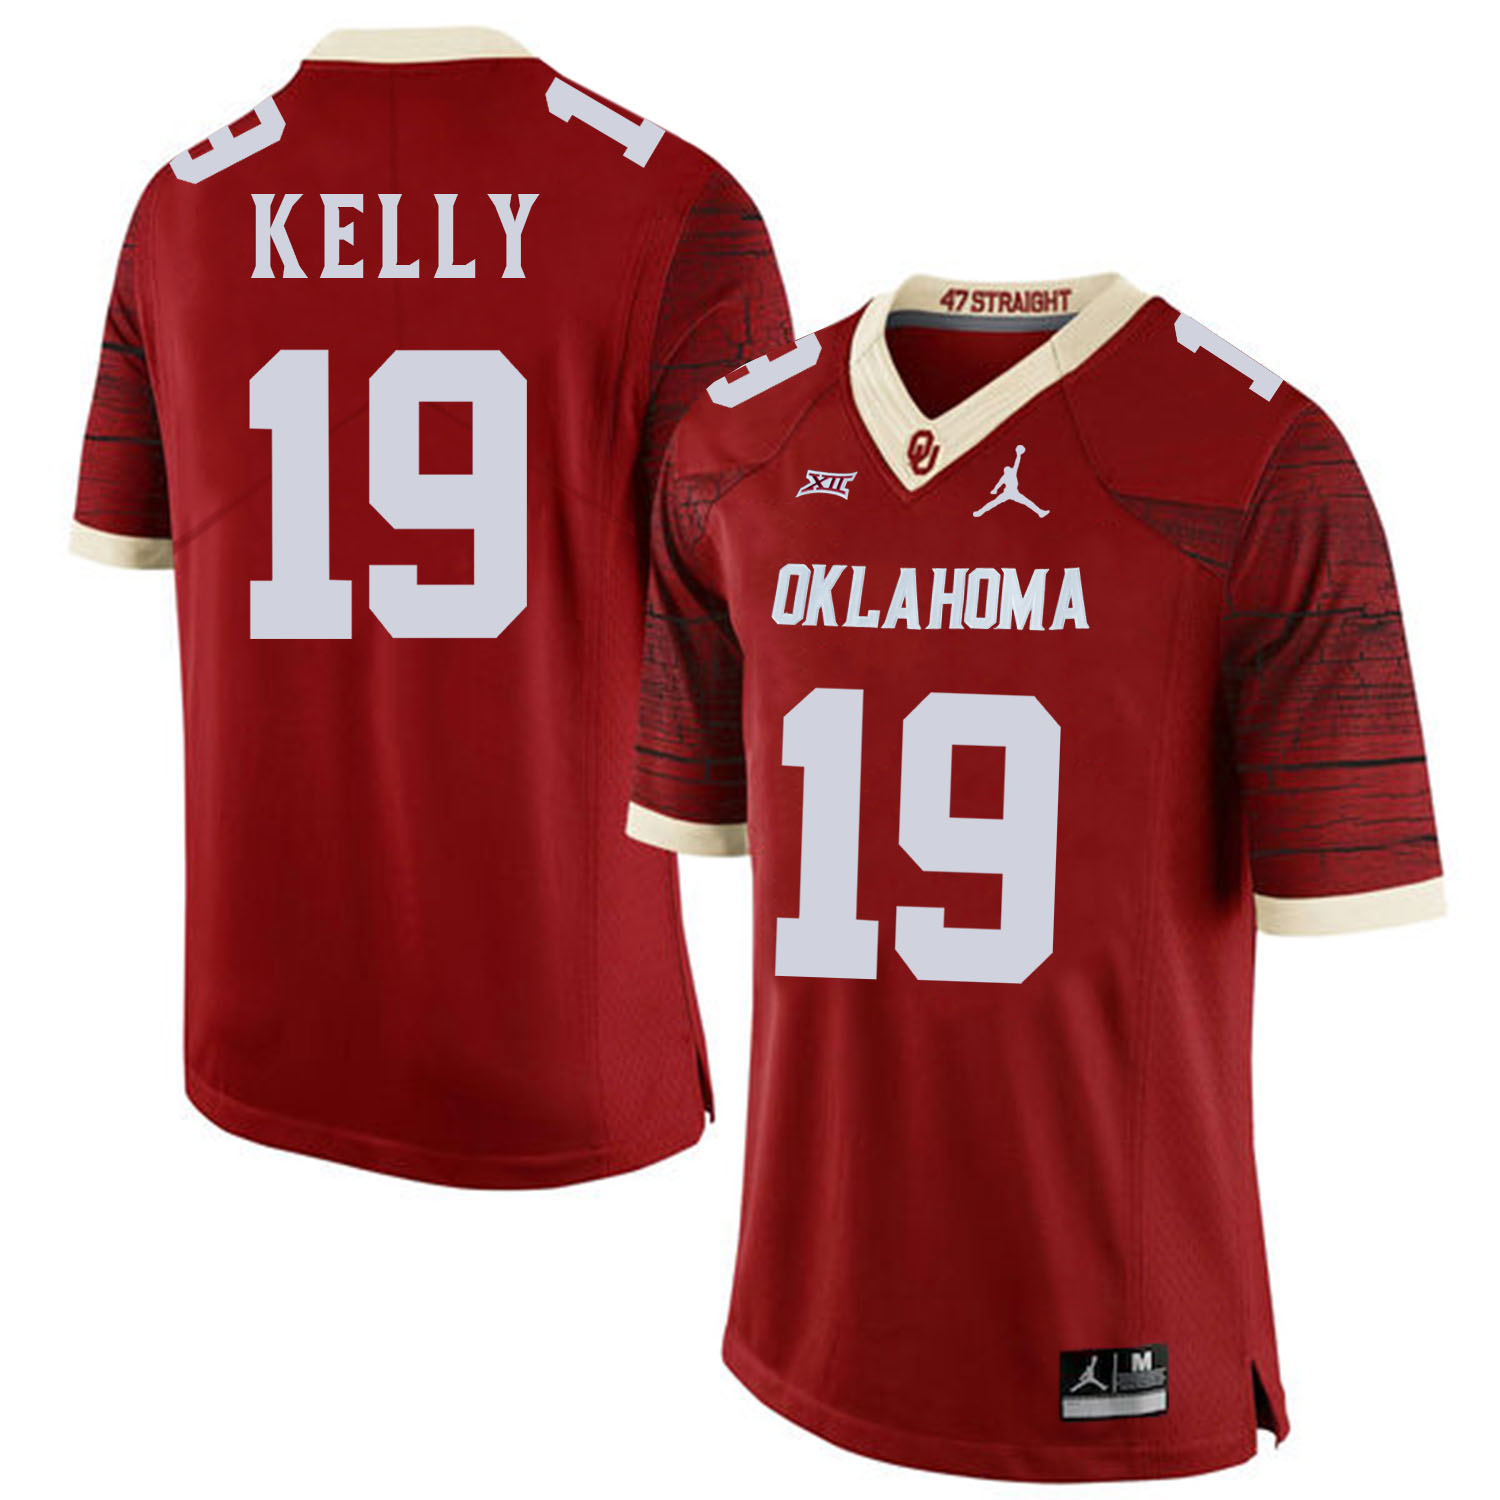 Oklahoma Sooners 19 Caleb Kelly Red 47 Game Winning Streak College Football Jersey